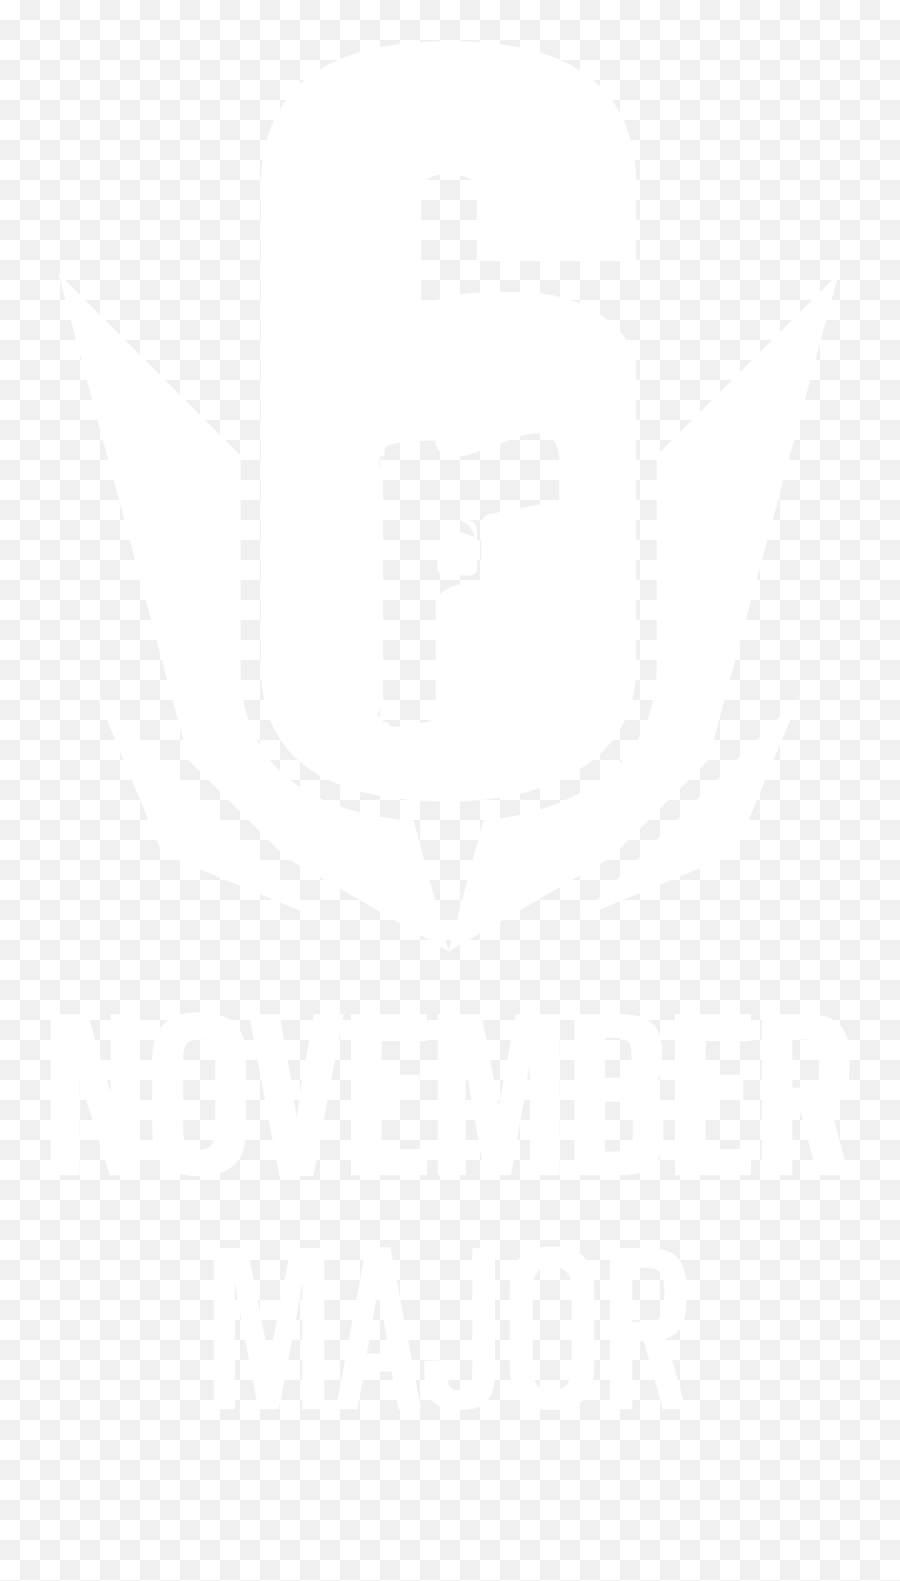 Predator Rainbow Six Partnership 2021 Six Invitational Emoji,Rainbow Six Logo Png